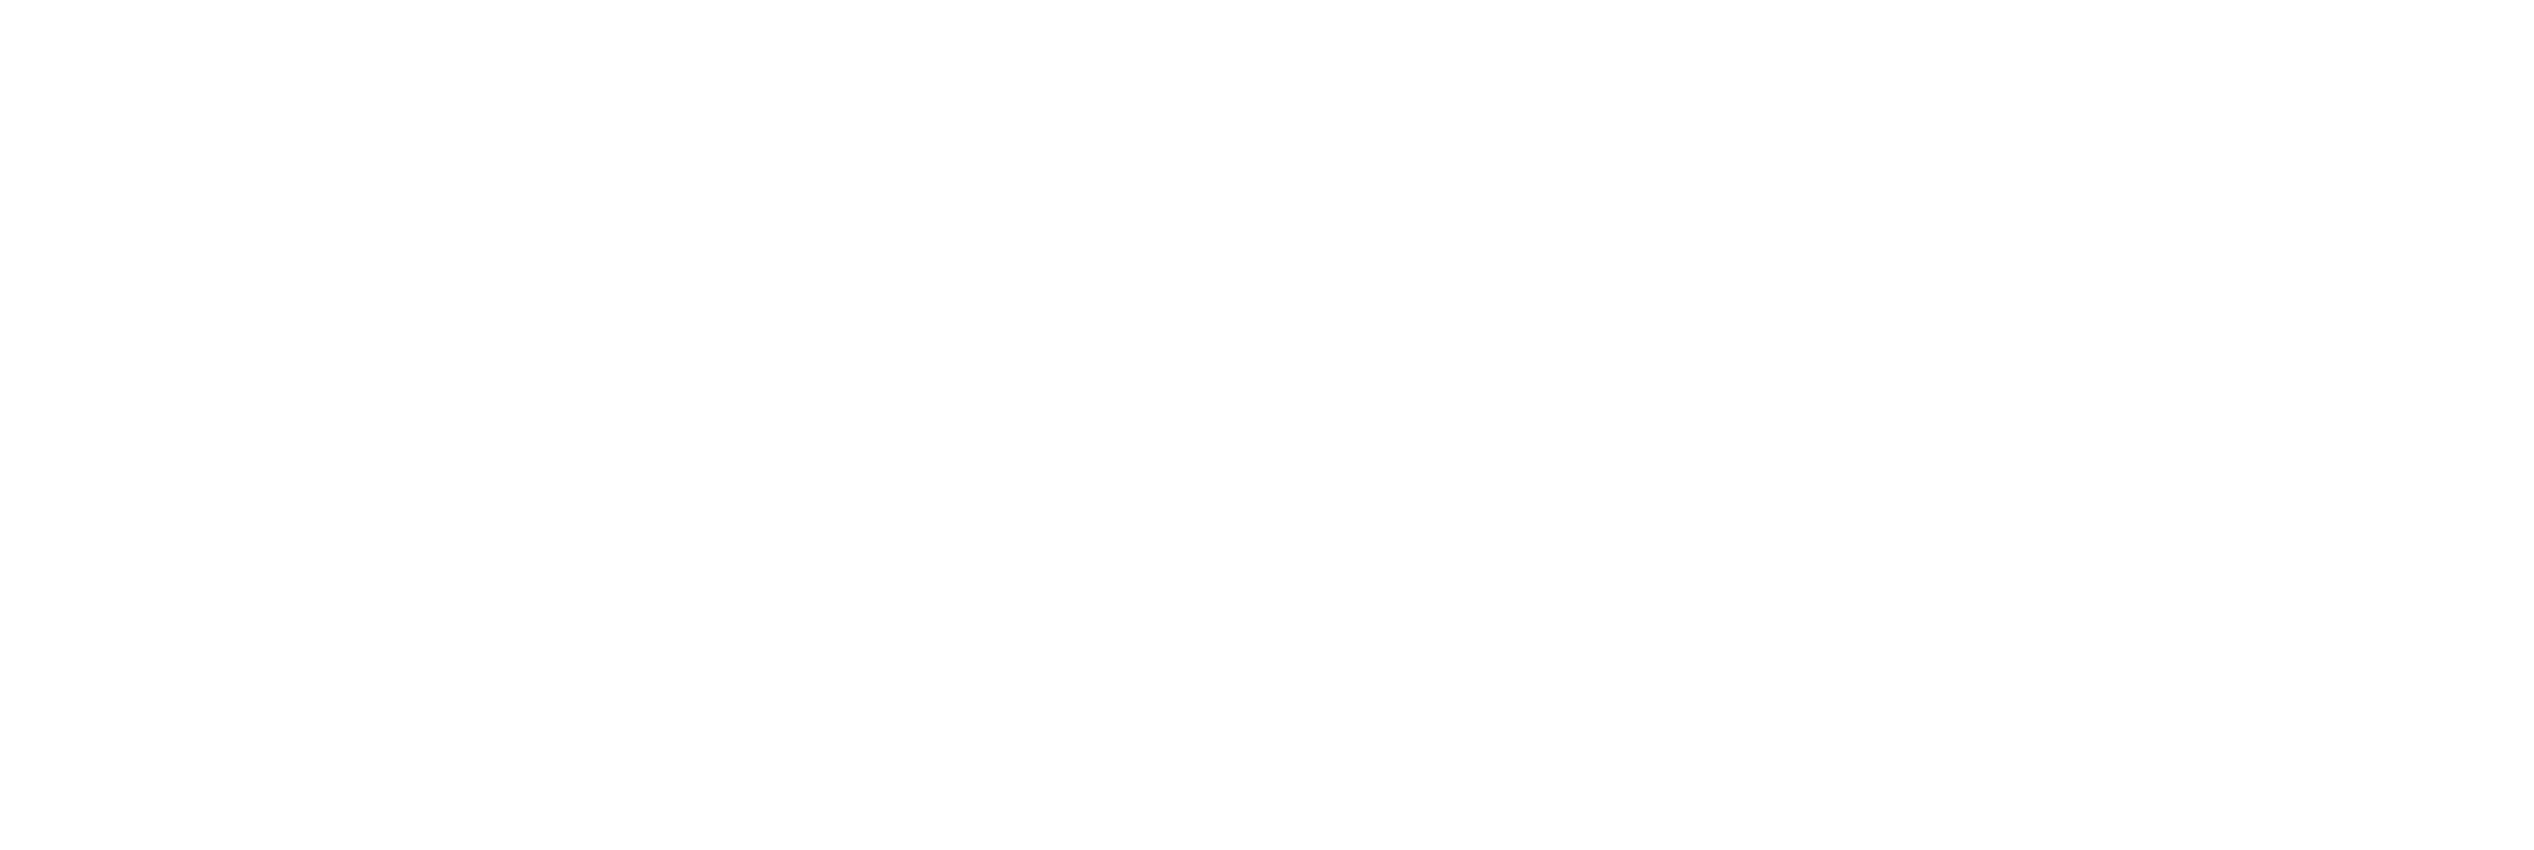 AIMVS logo